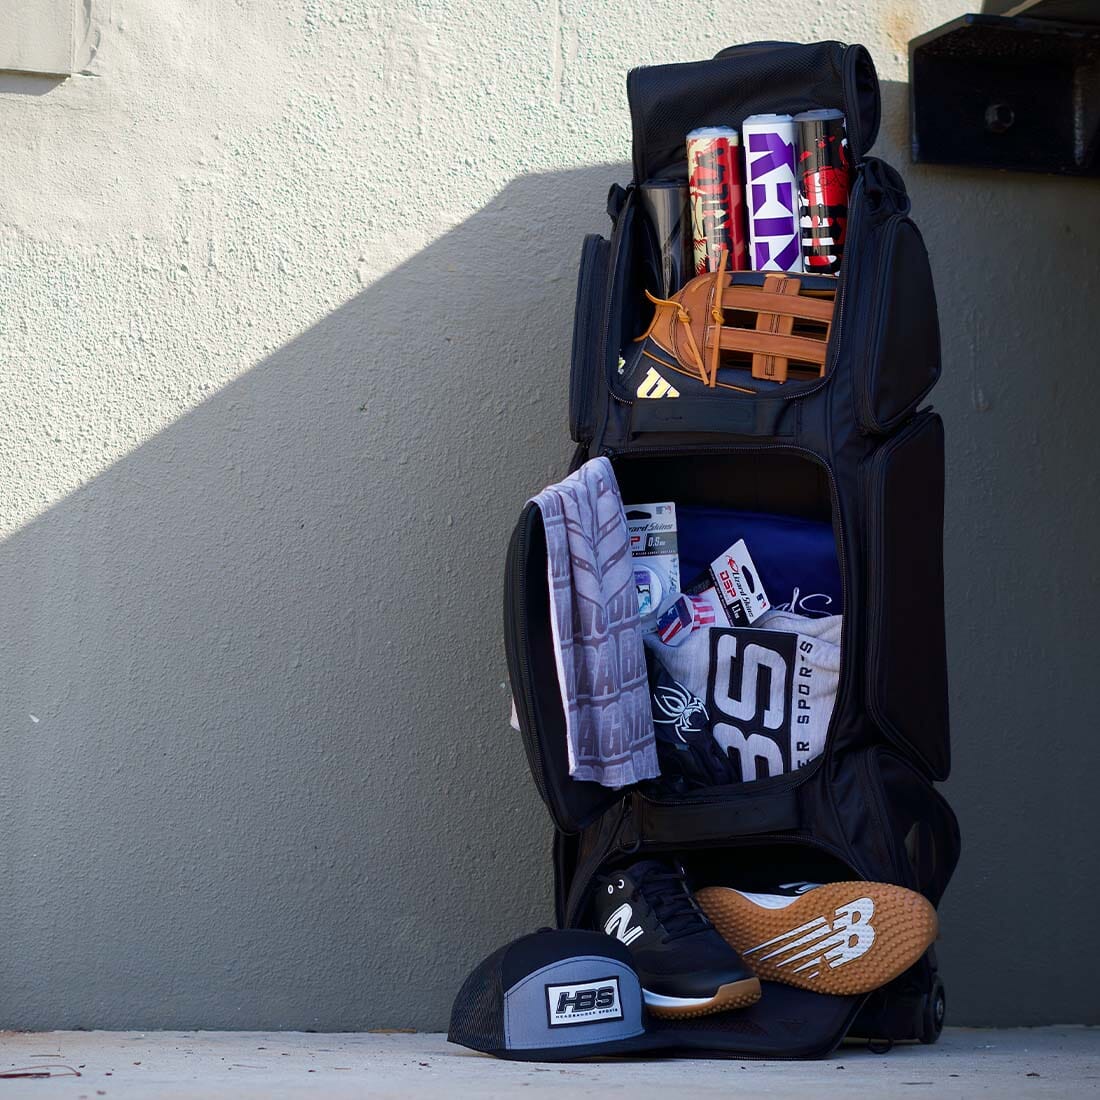 Demarini Voodoo Rebirth Backpack Baseball Pack Bat Bag Blue and Black | eBay